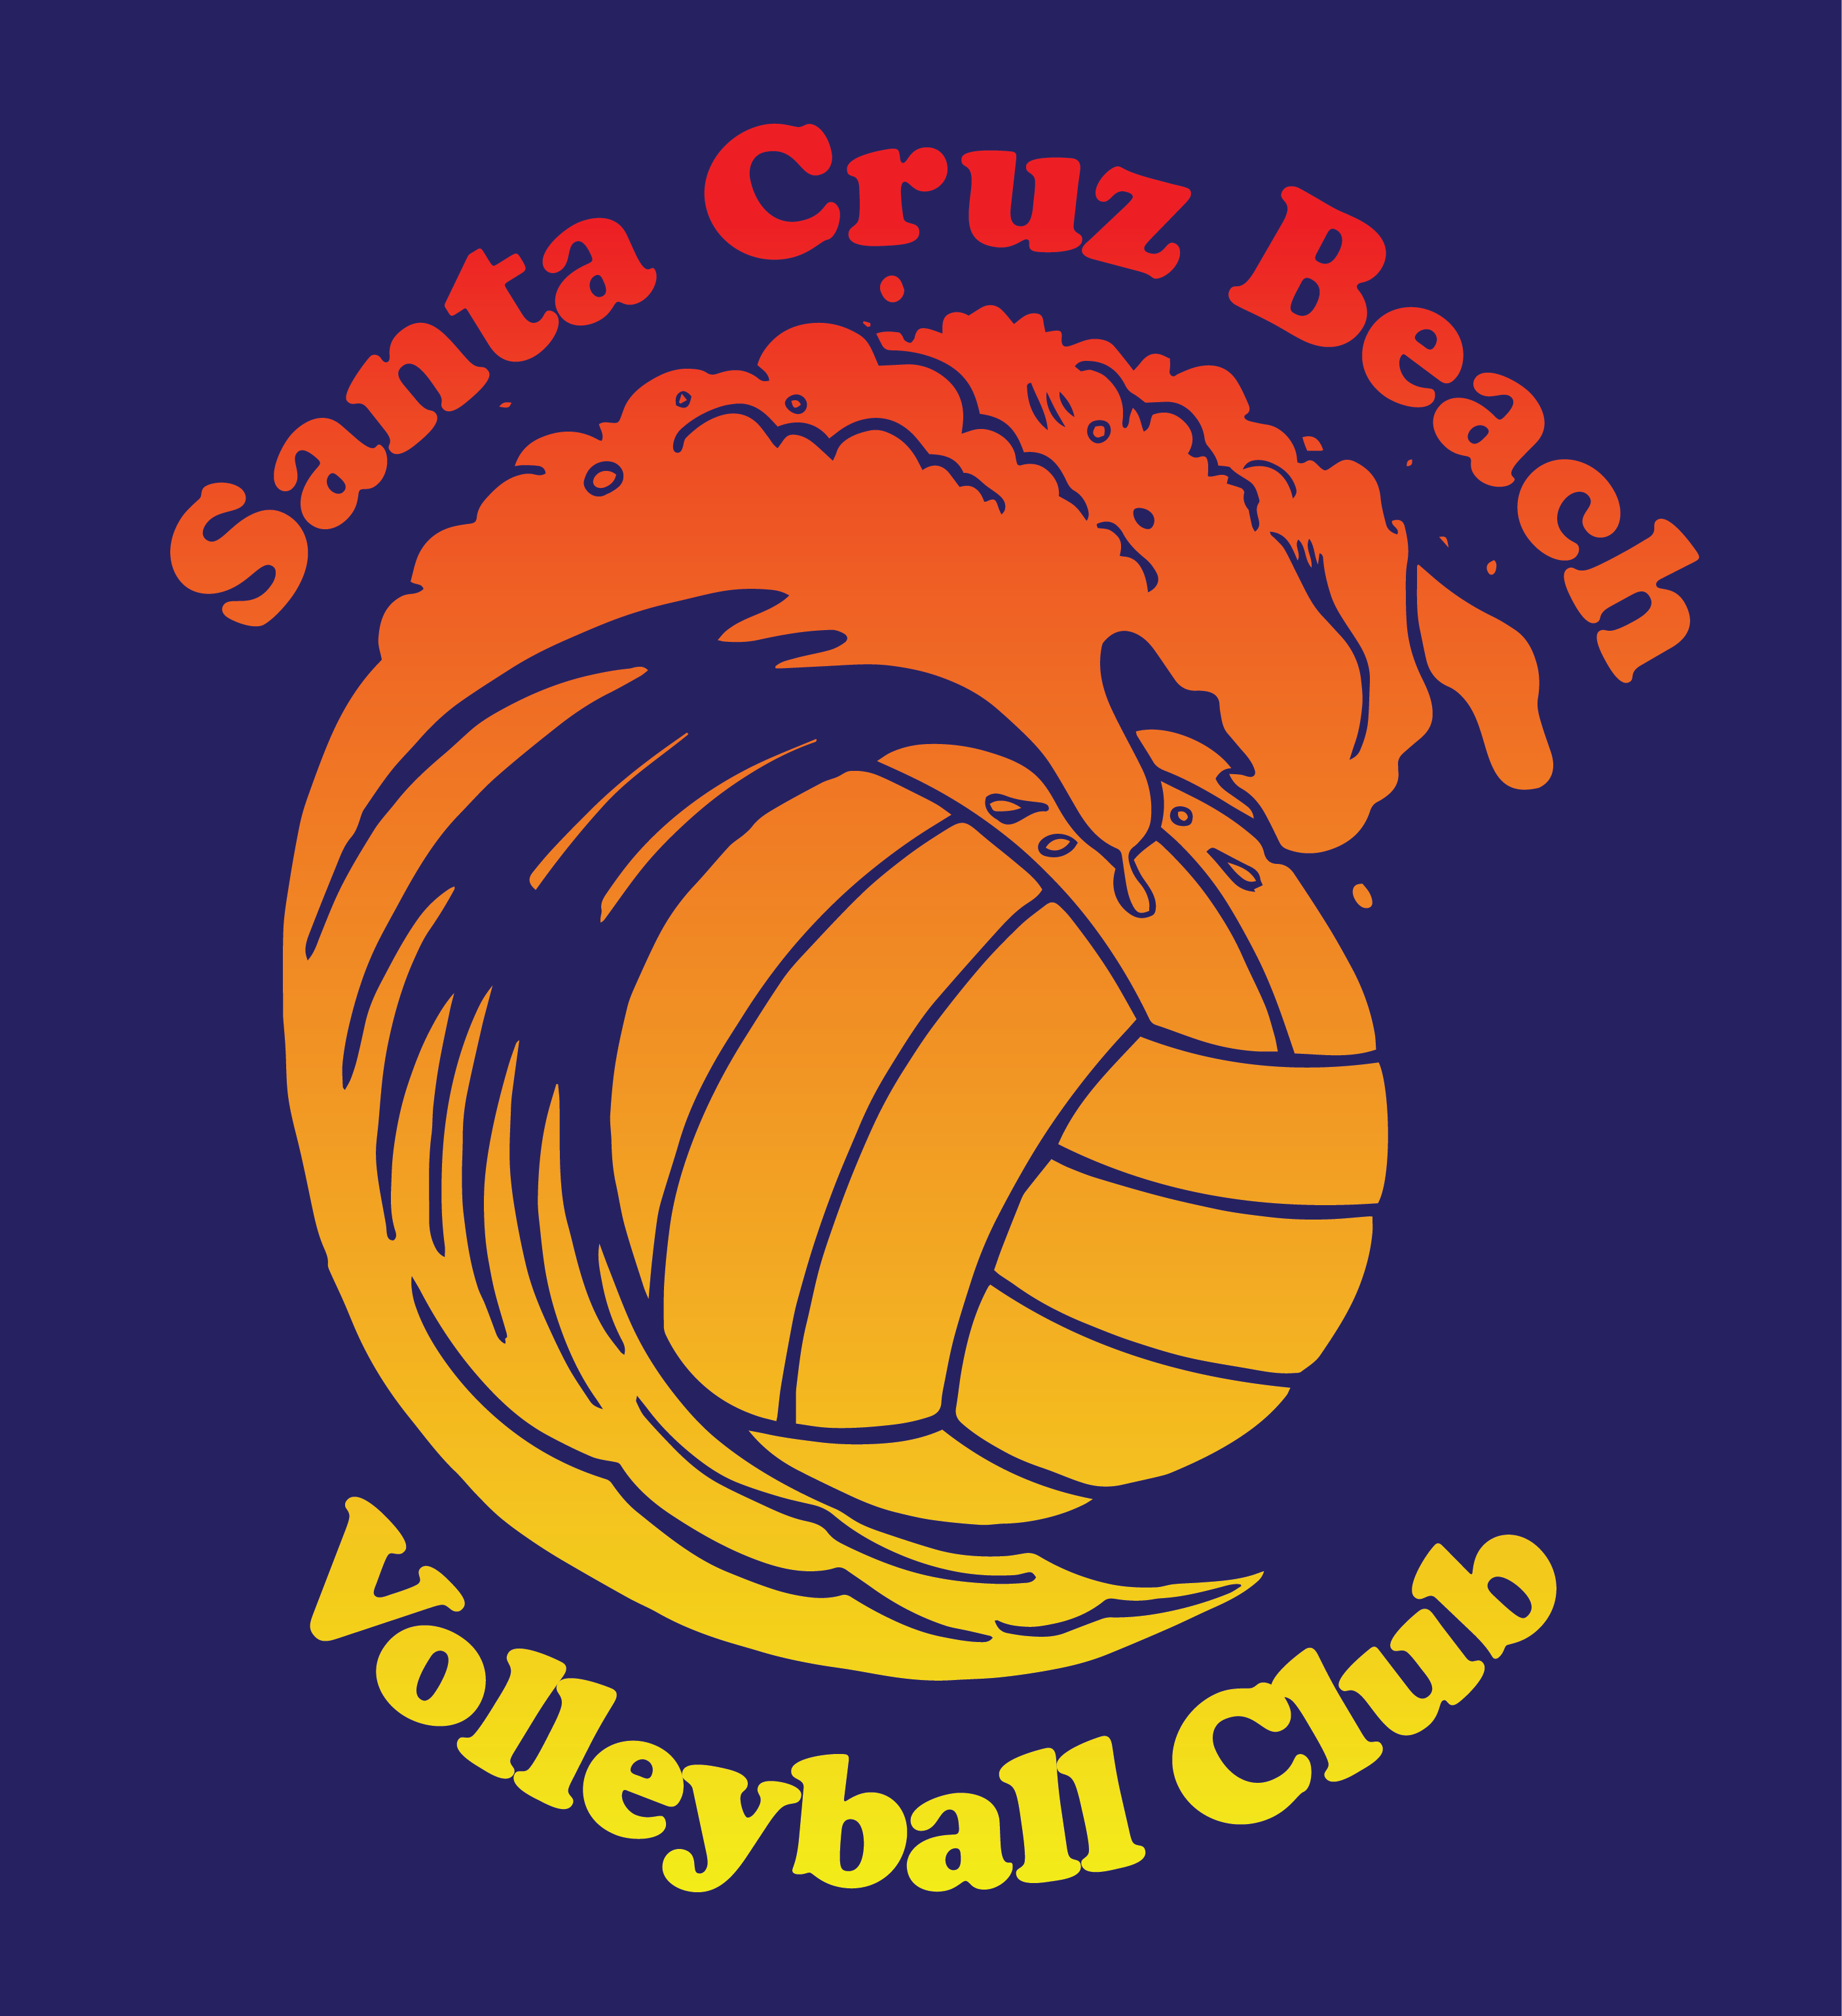 Santa Cruz Beach Volleyball Club Beach Volleyball Clubs of America